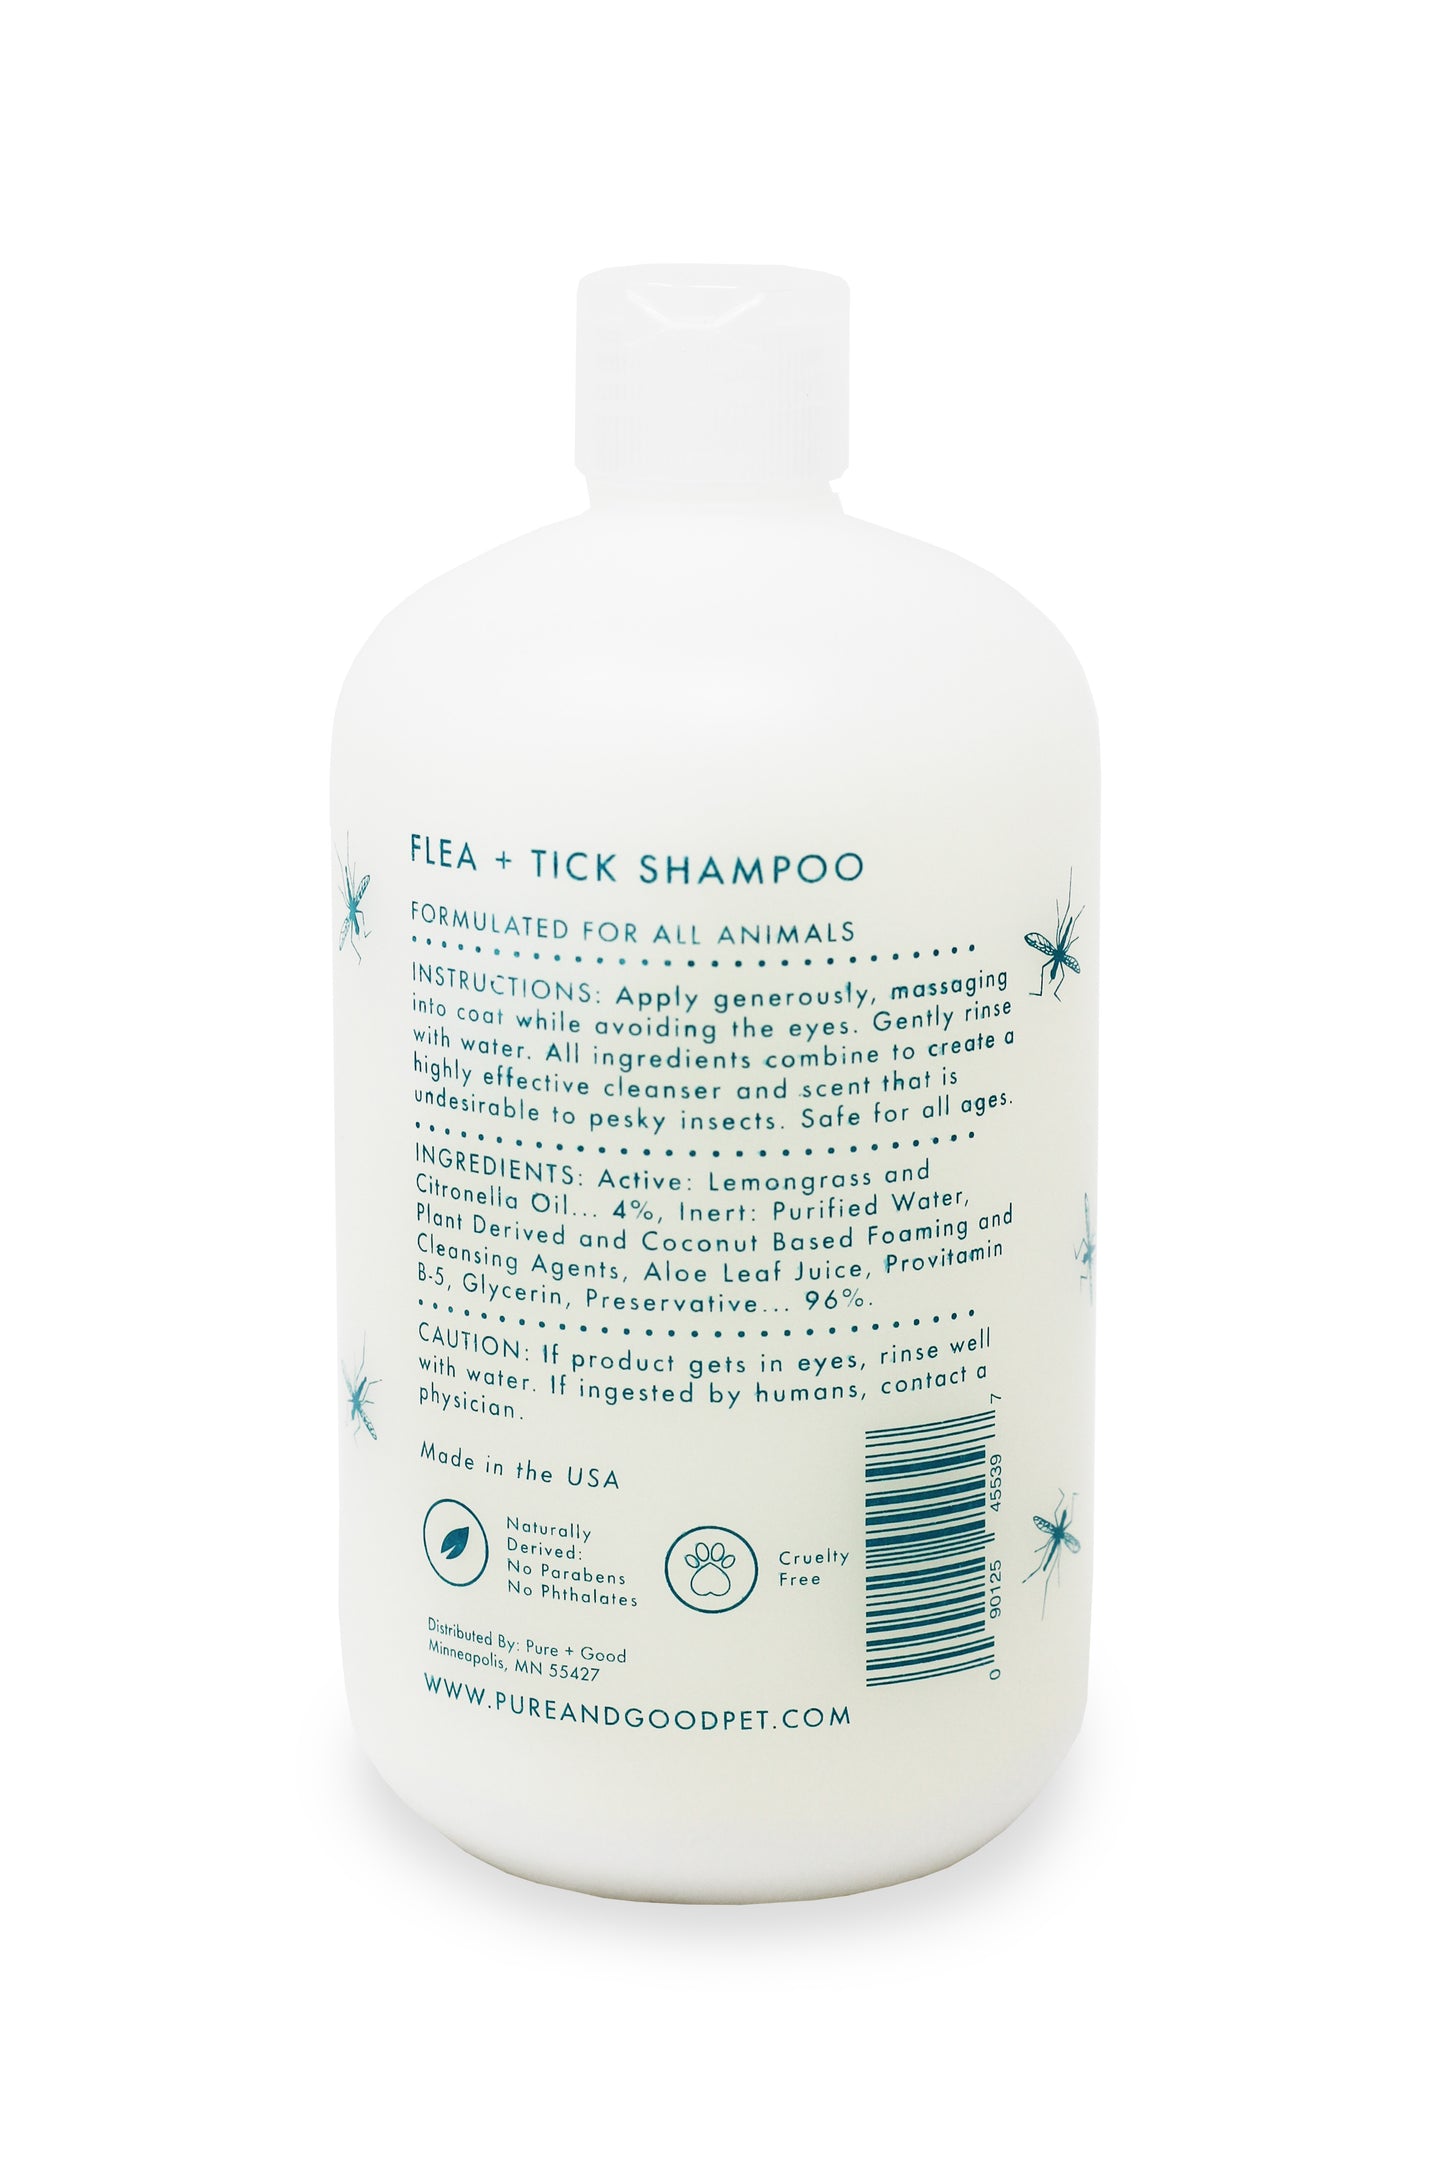 Pure + Good Pet Flea + Tick Shampoo